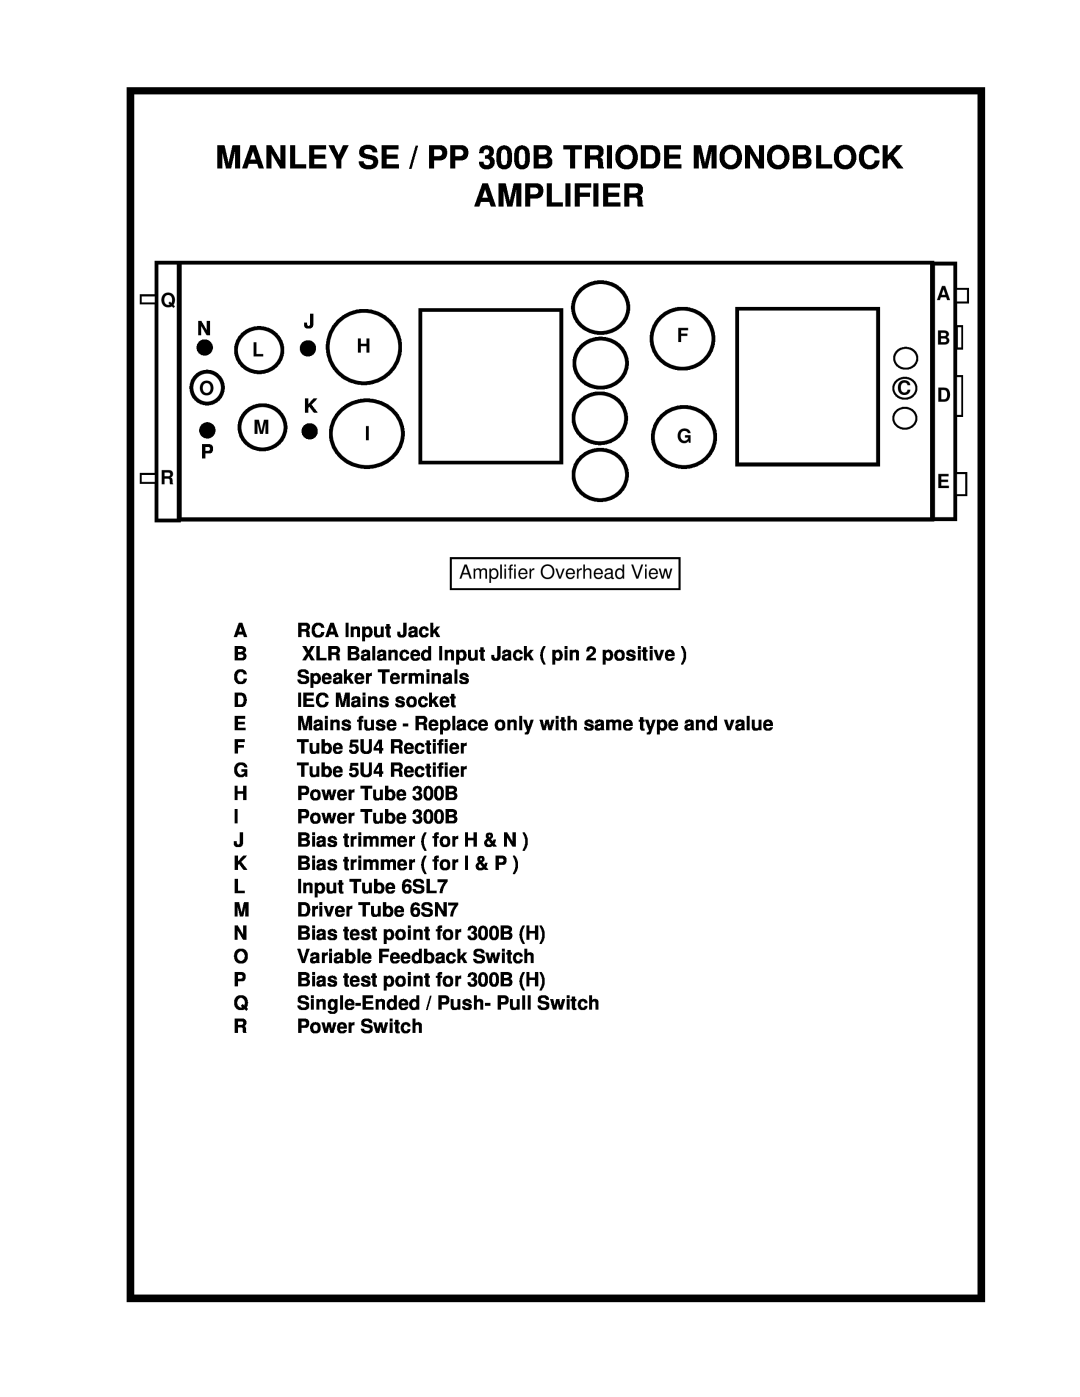 Manley Labs SE/PP 300B owner manual MANLEY SE / PP 300B TRIODE MONOBLOCK AMPLIFIER 